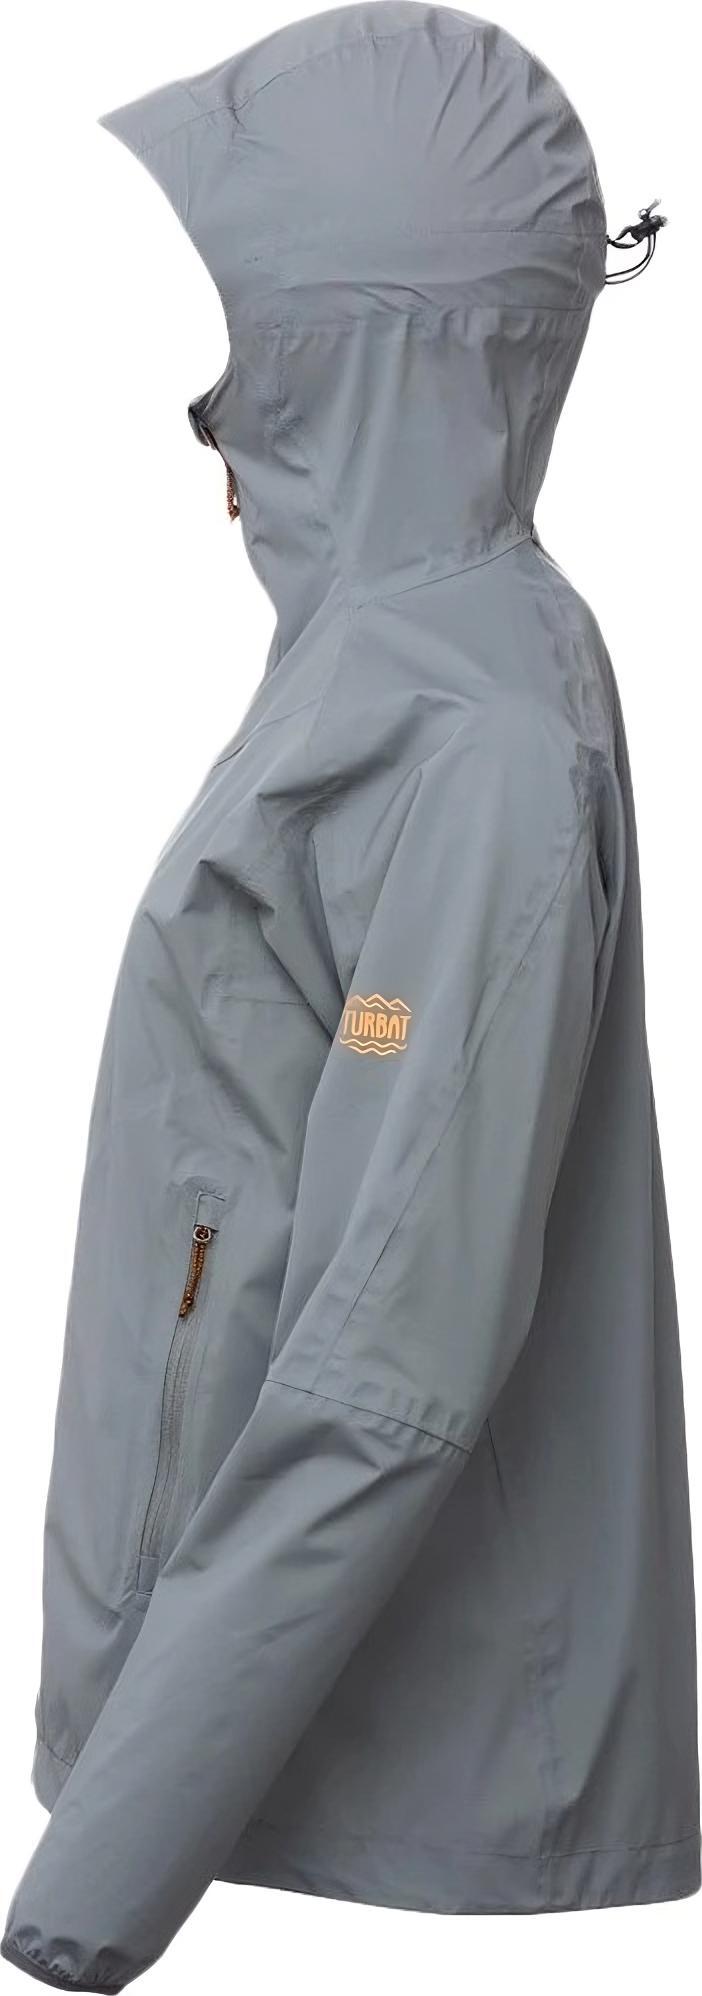 Куртка женская Turbat Reva Wmn steel gray S серый фото 4